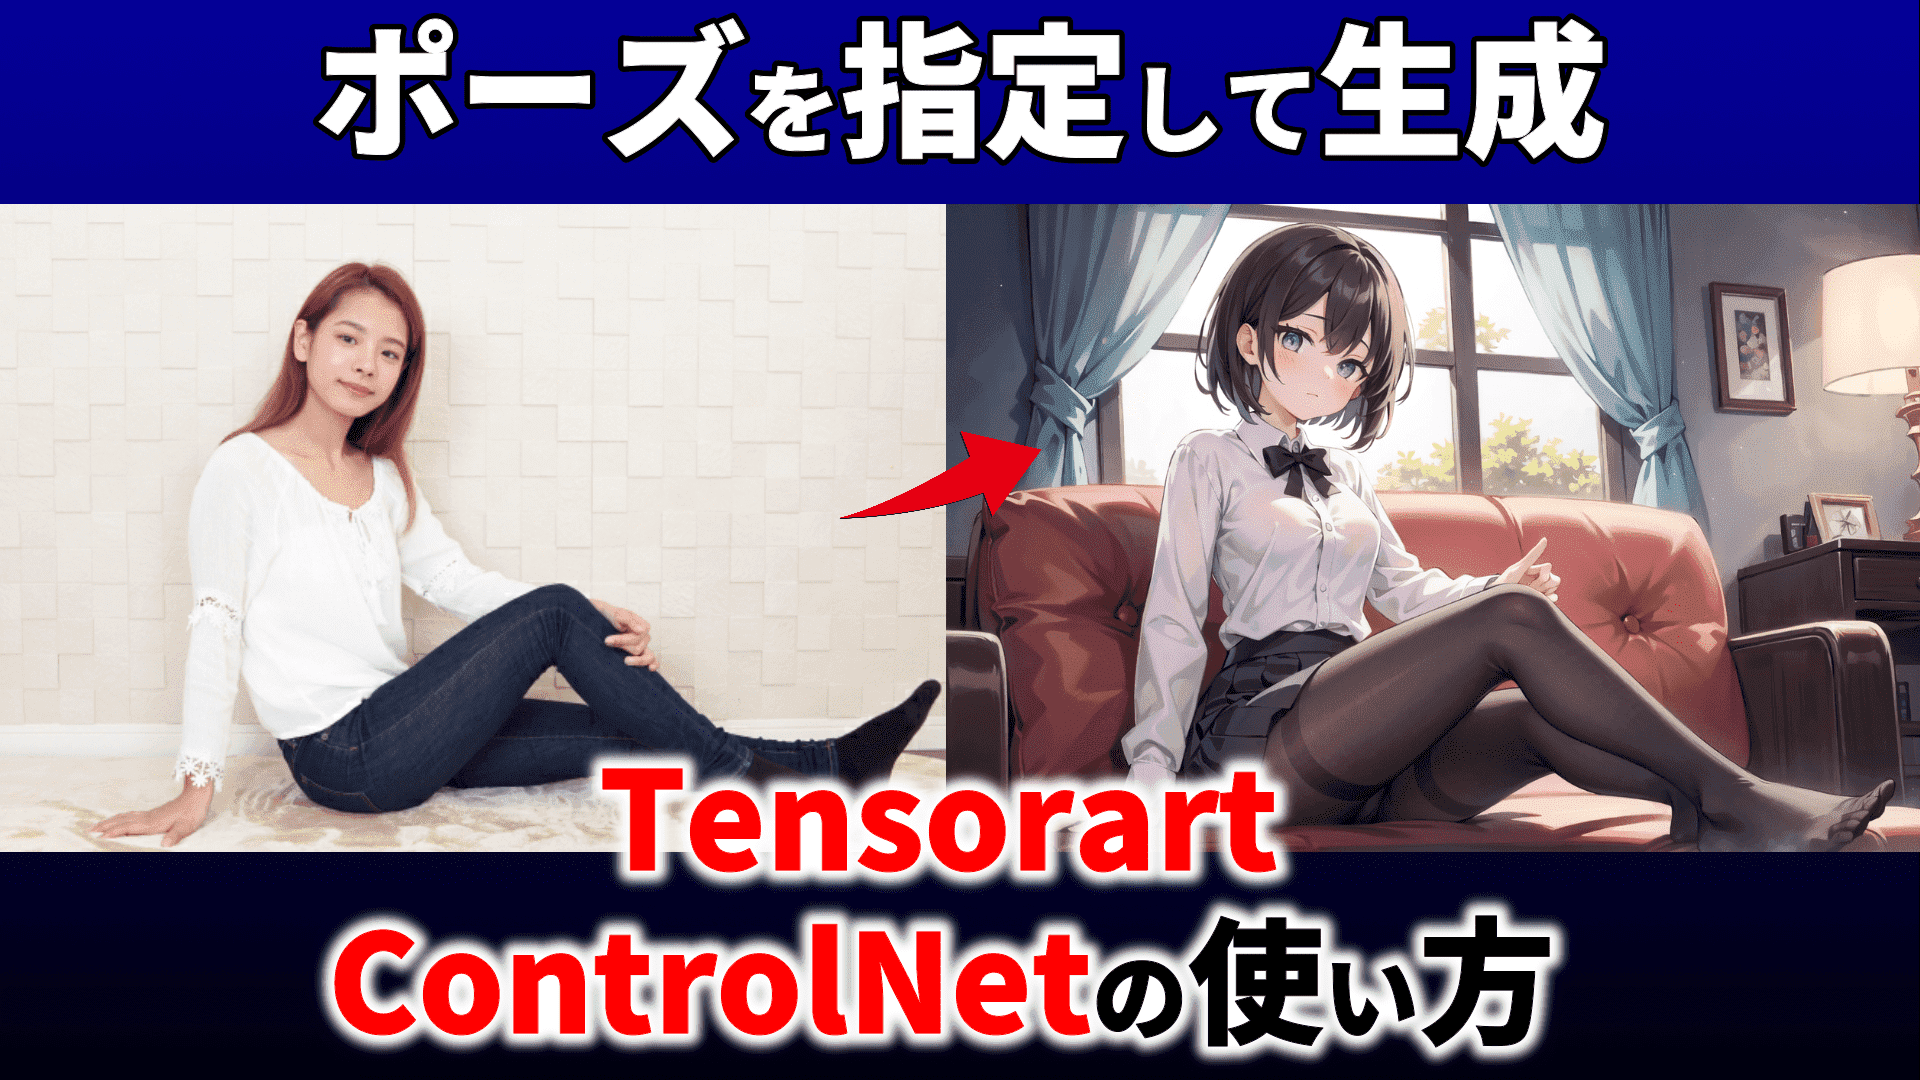 【Tensor art】ControlNetでポーズを指定して生成する方法